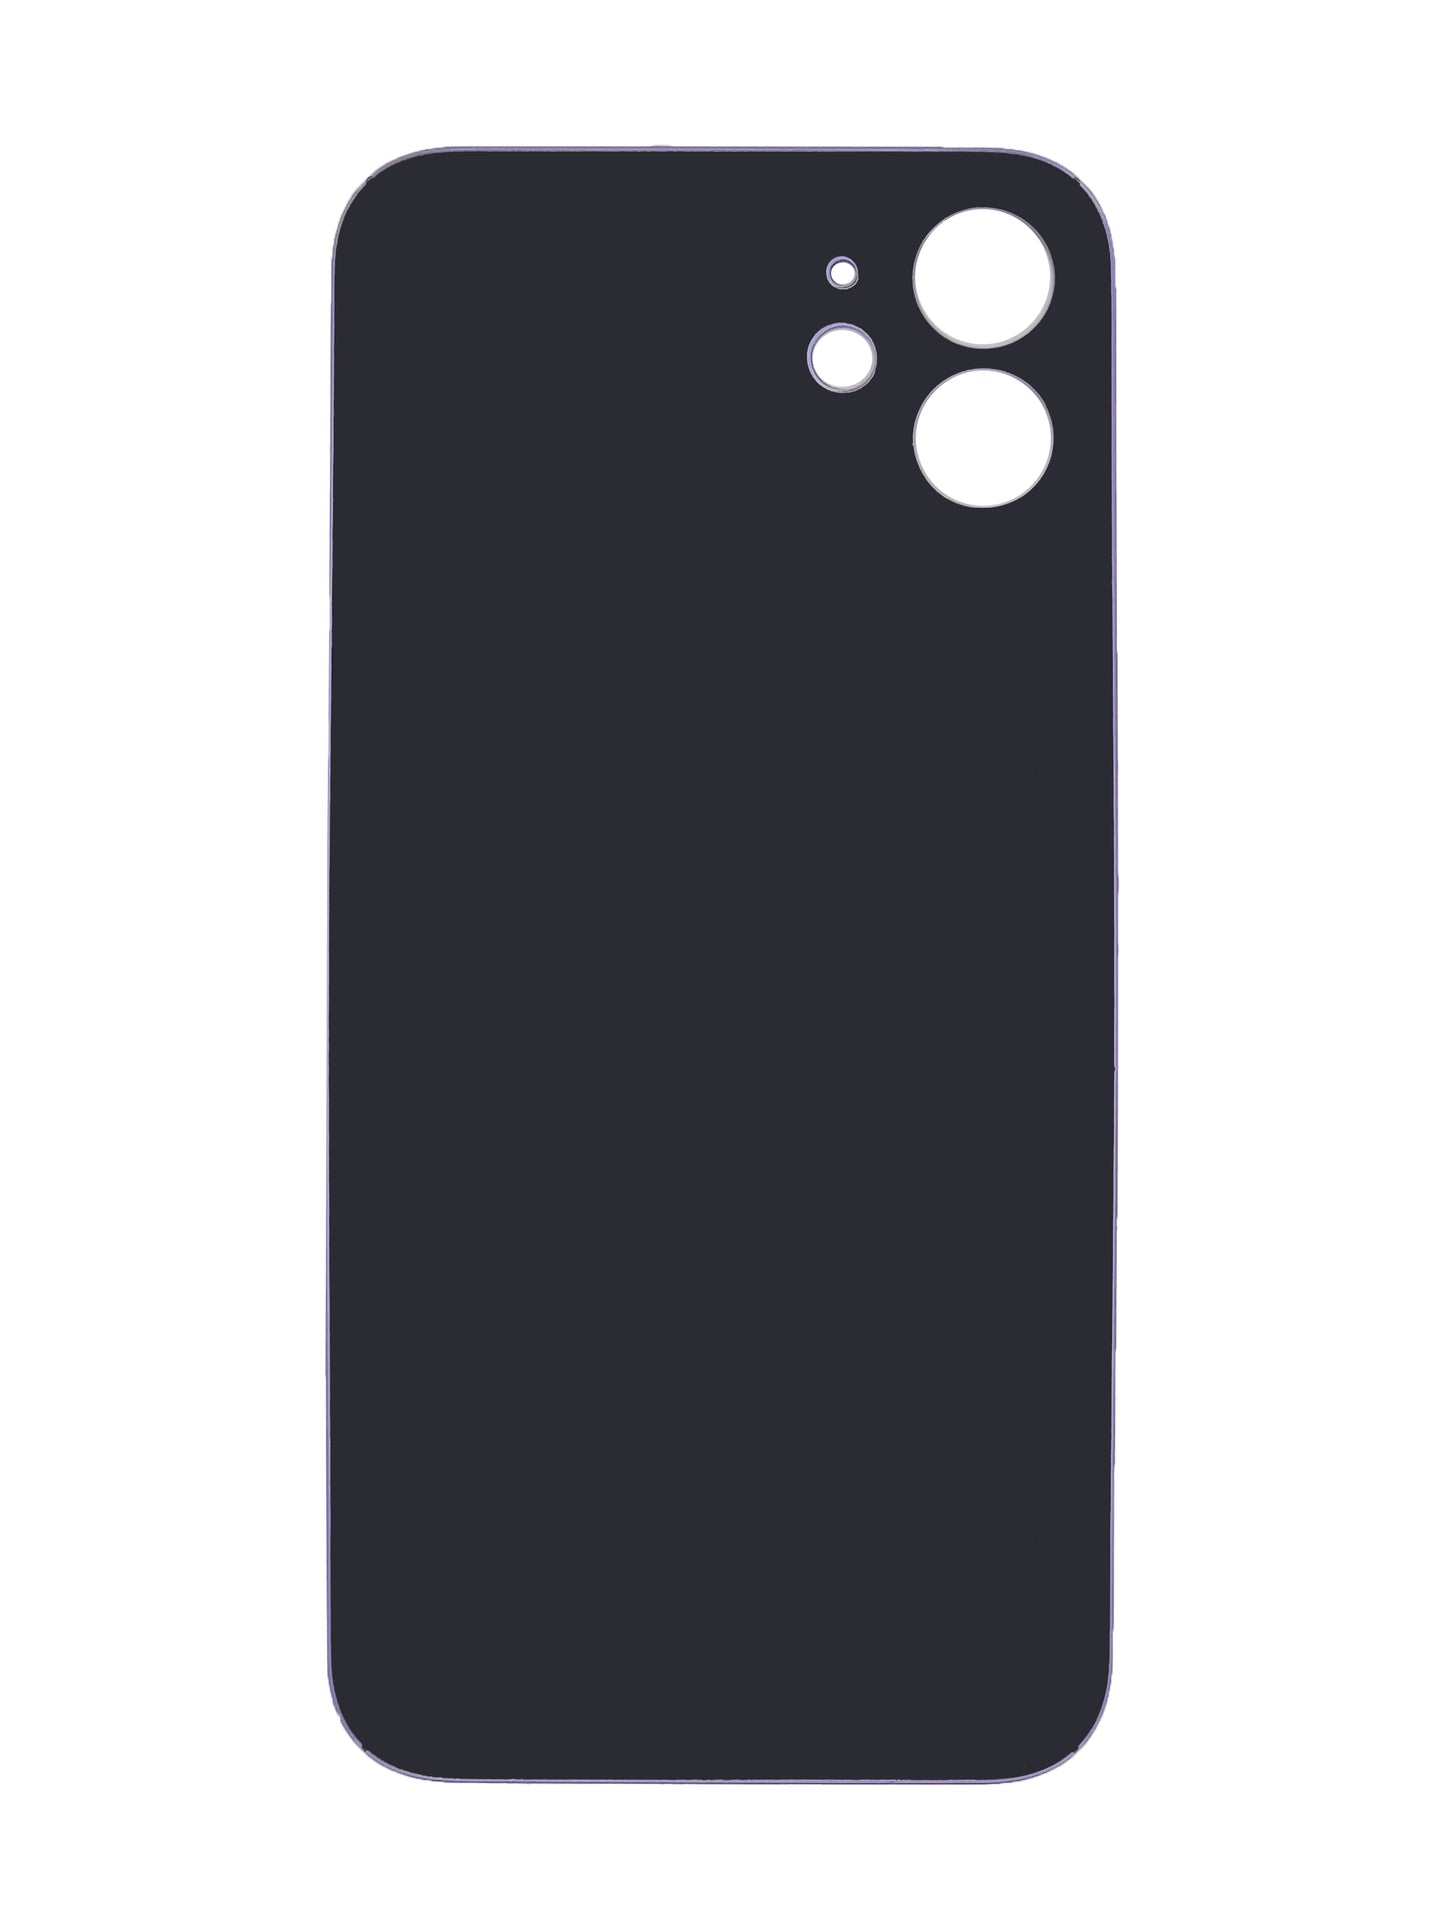 iPhone 12 Back Glass (No Logo) (Purple)